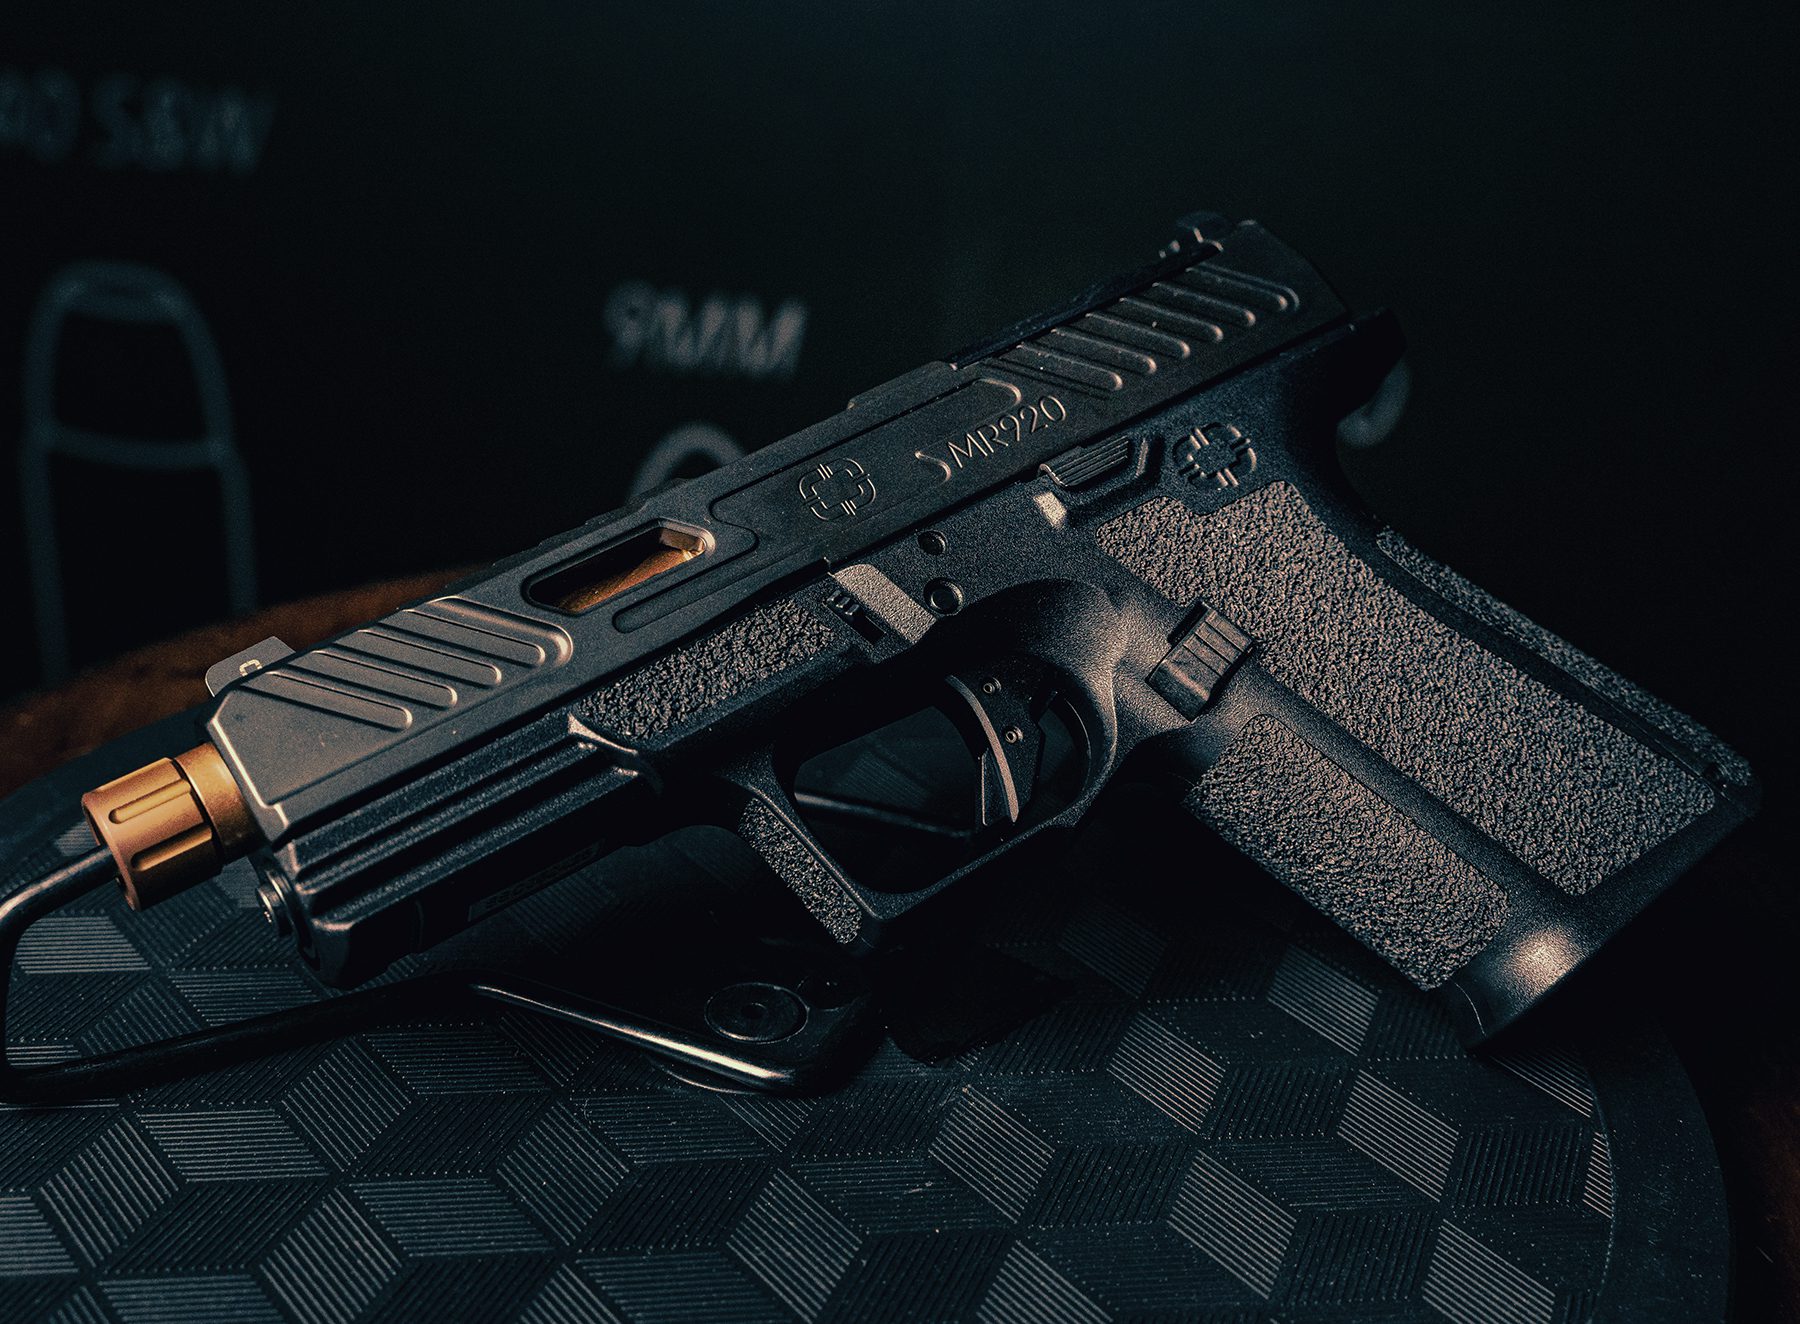 shadow systems MR920 pistol